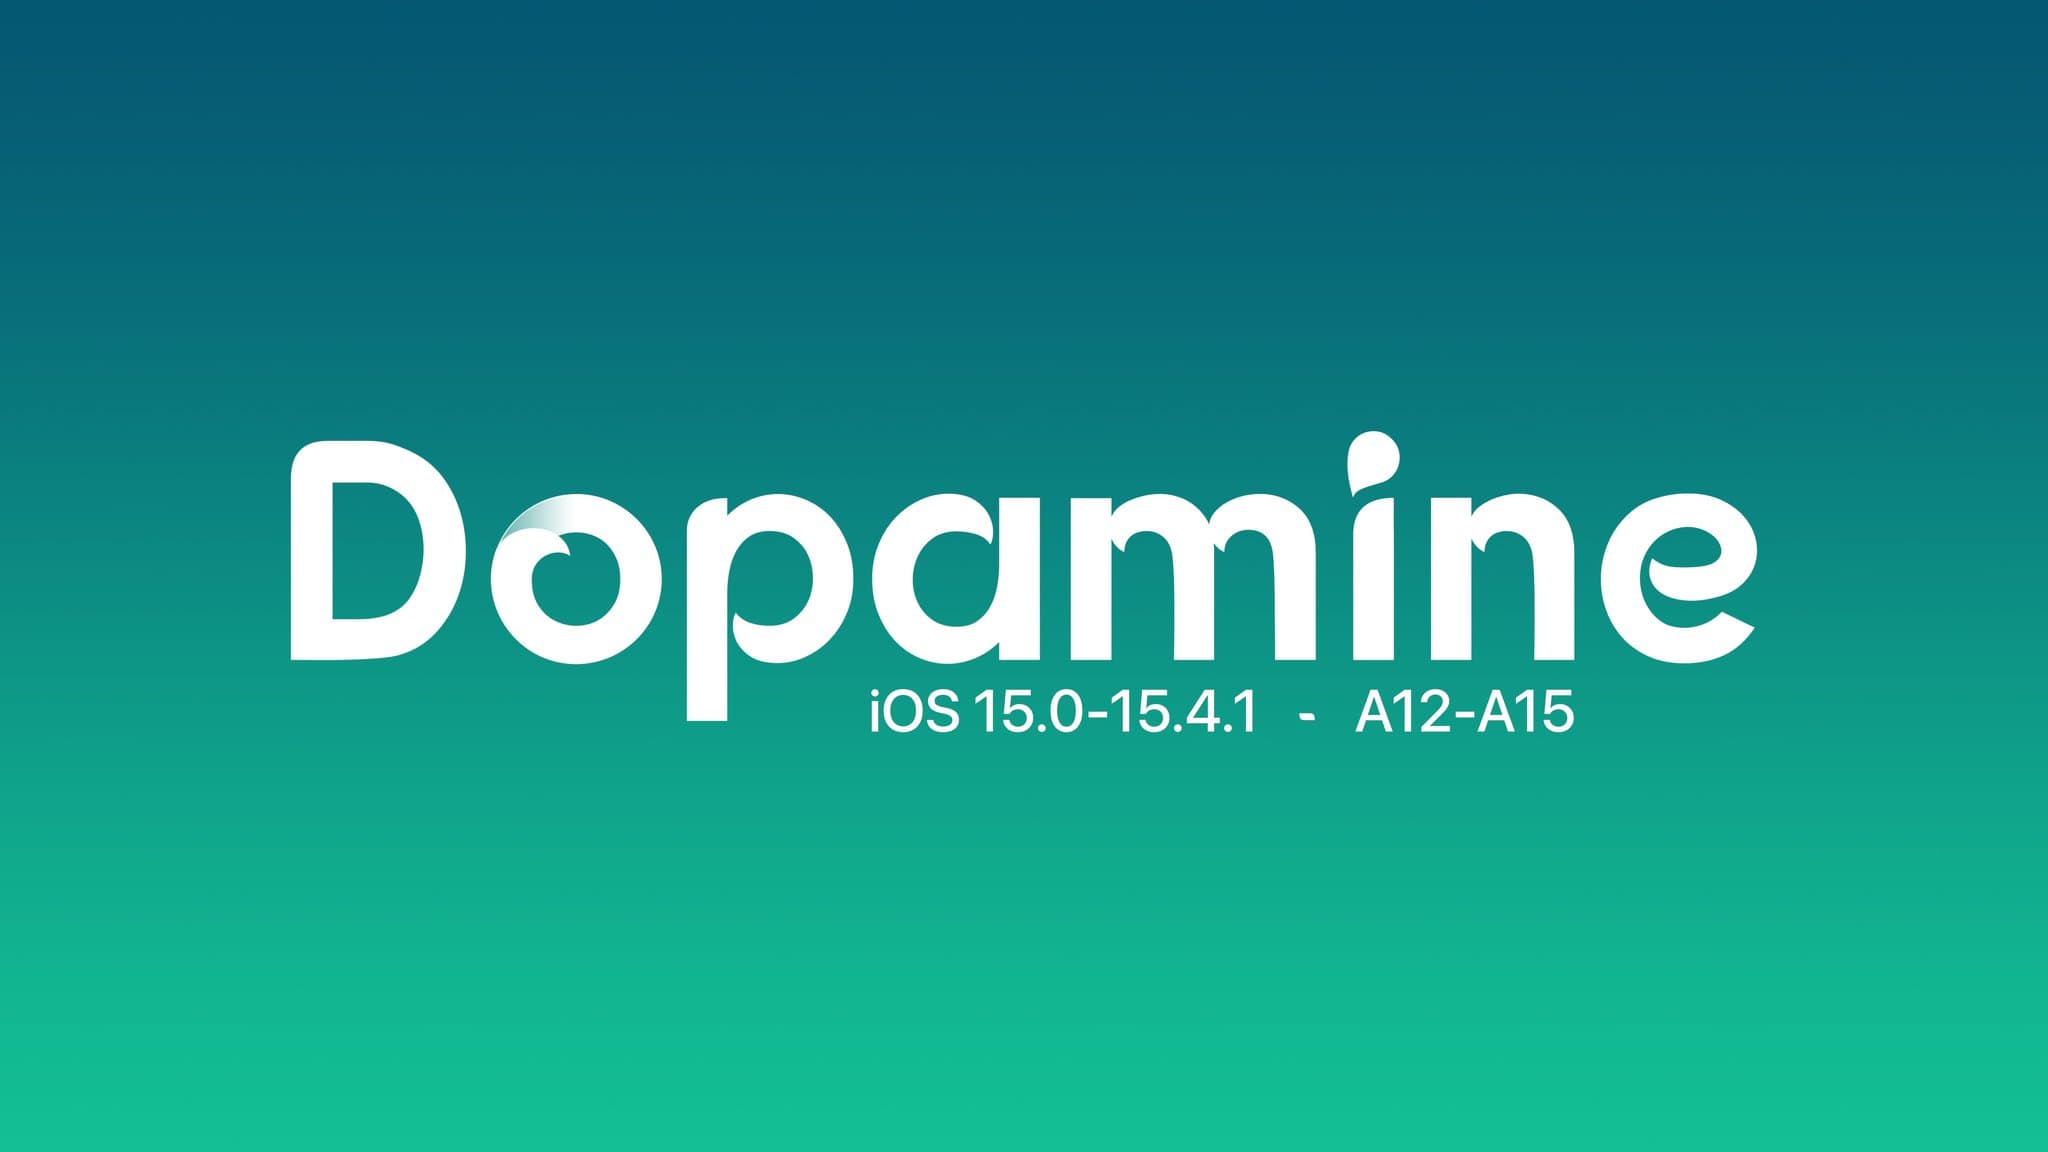 Cách jailbreak iOS 15.0 - 16.6.1 bằng Dopamine (thiết bị A12 - A16) 12